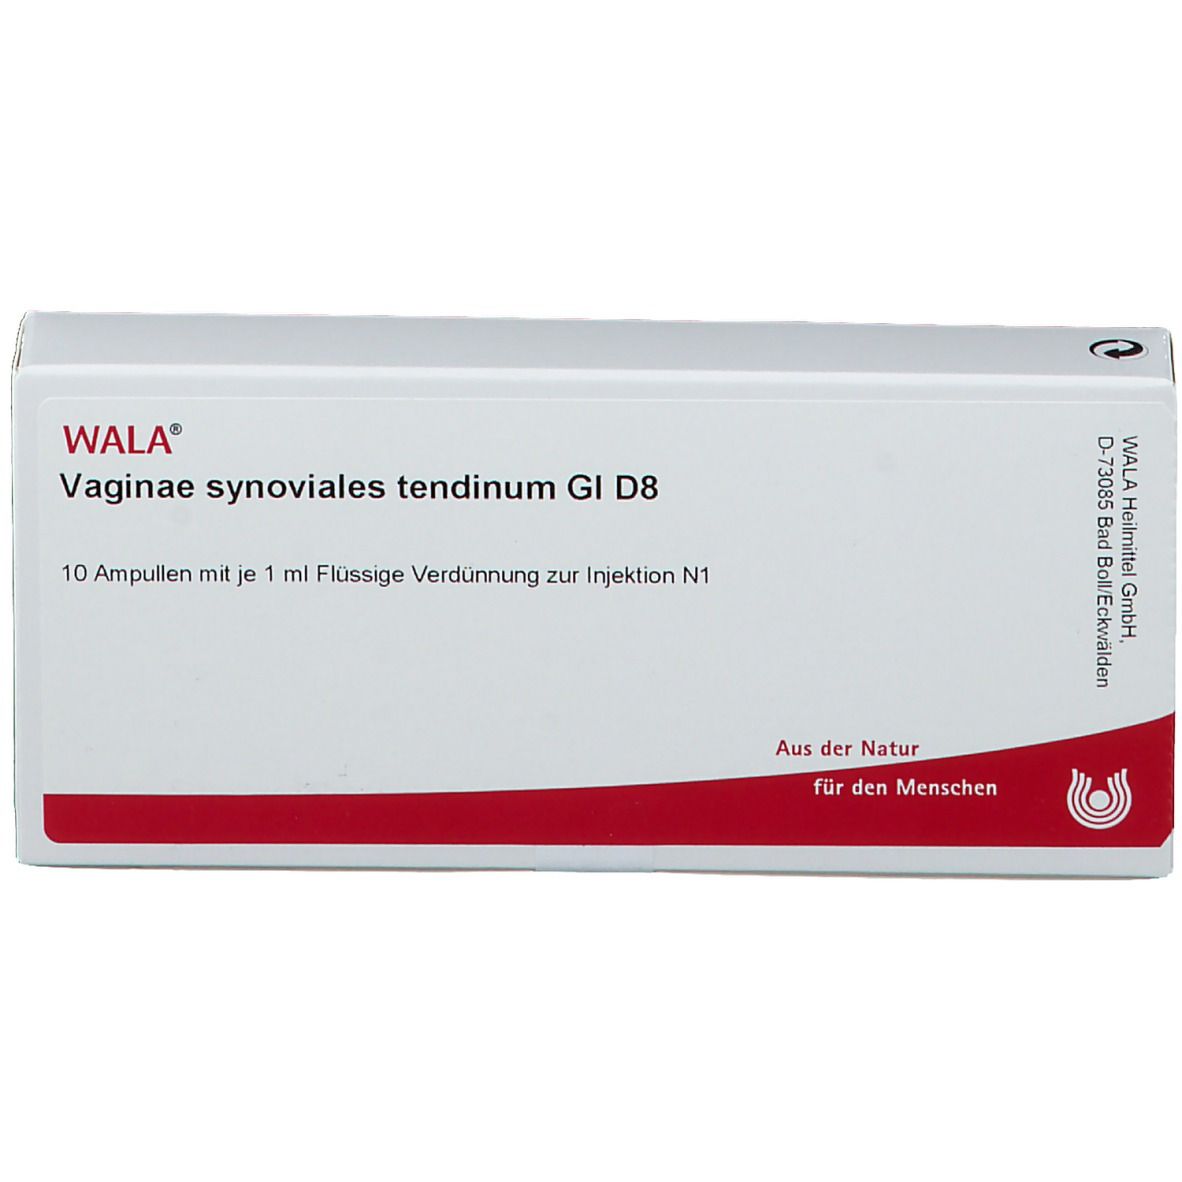 Wala® Vaginae synovialis tendinum Gl D 8